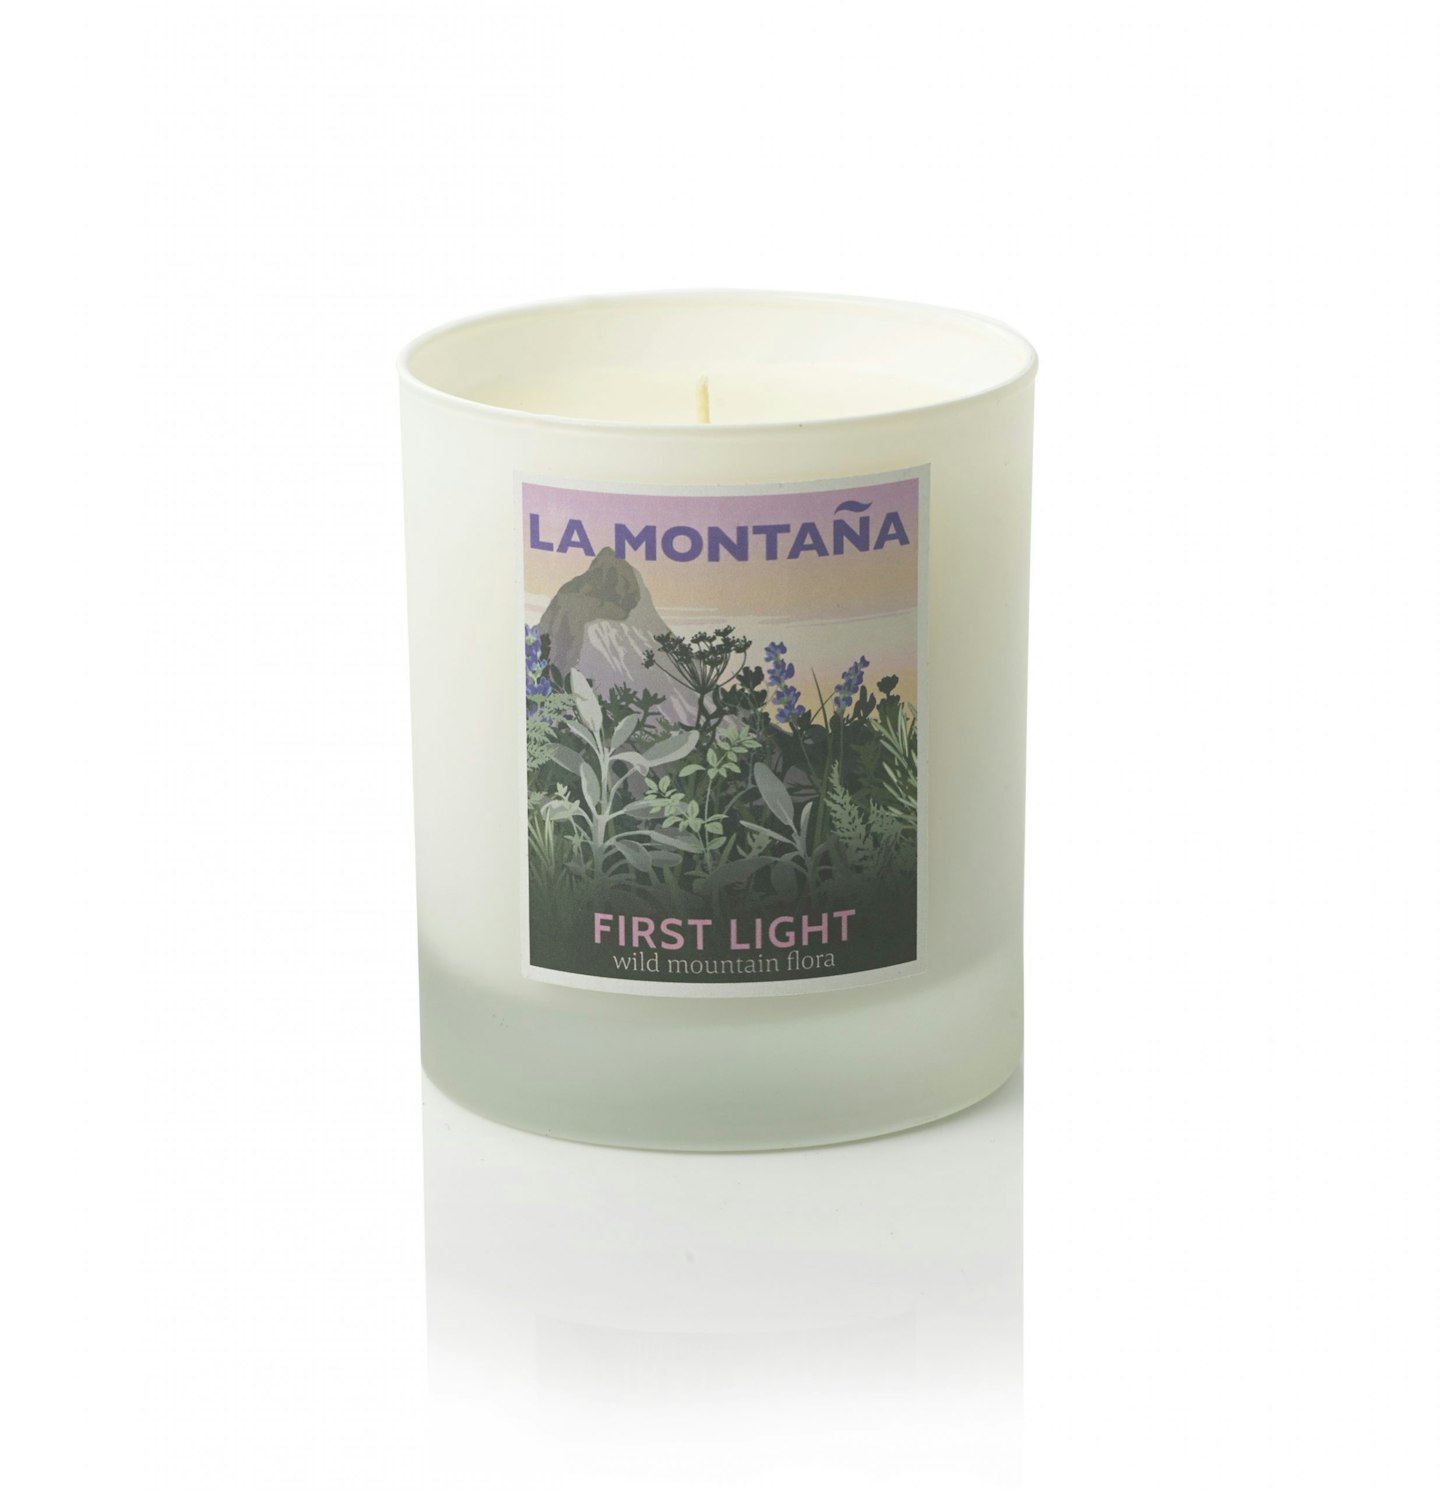 La Montana’s First Light candle